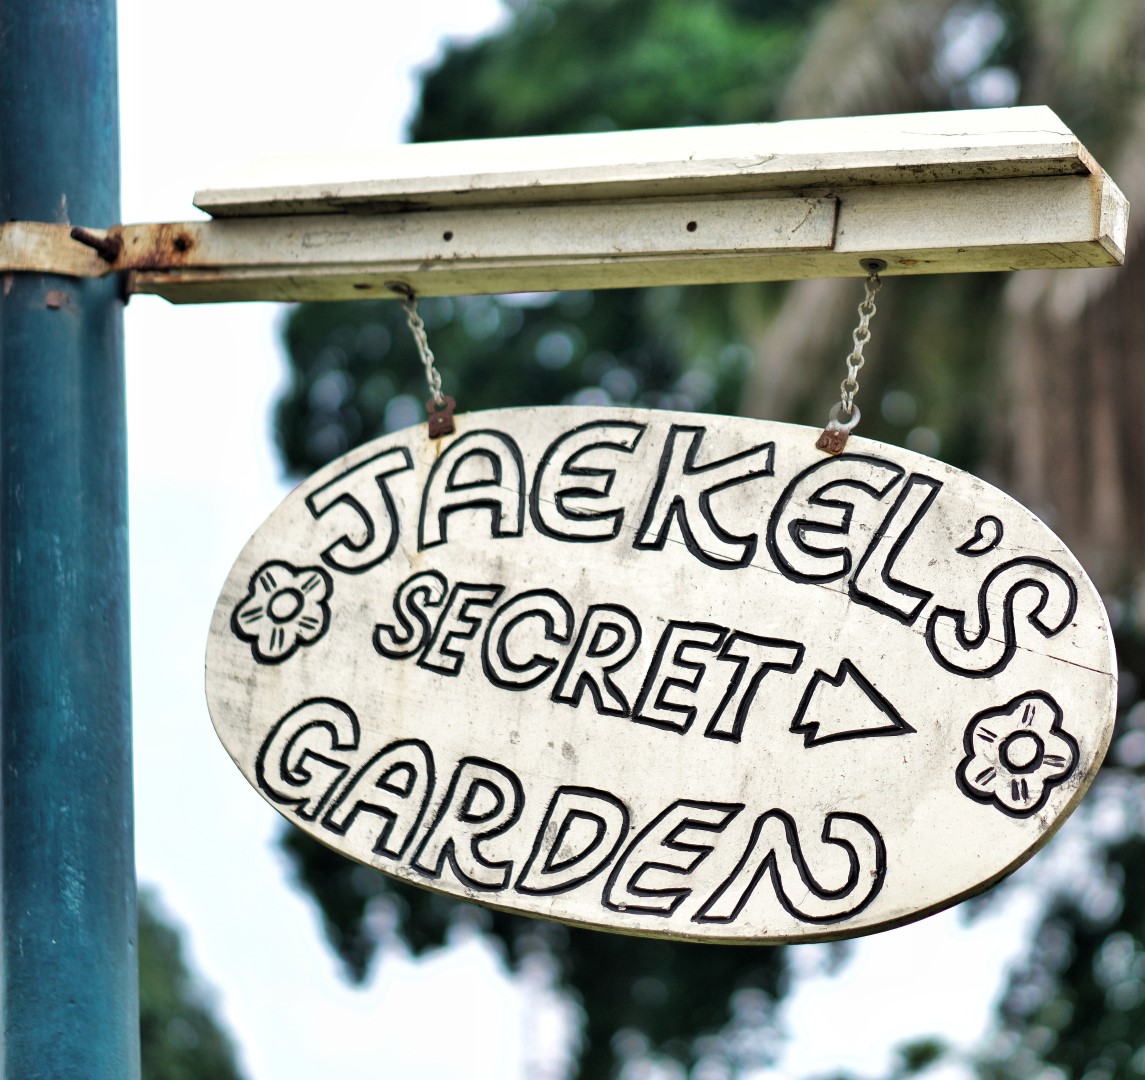 Jaekel secret garden sign post in Jaekel house Lagos